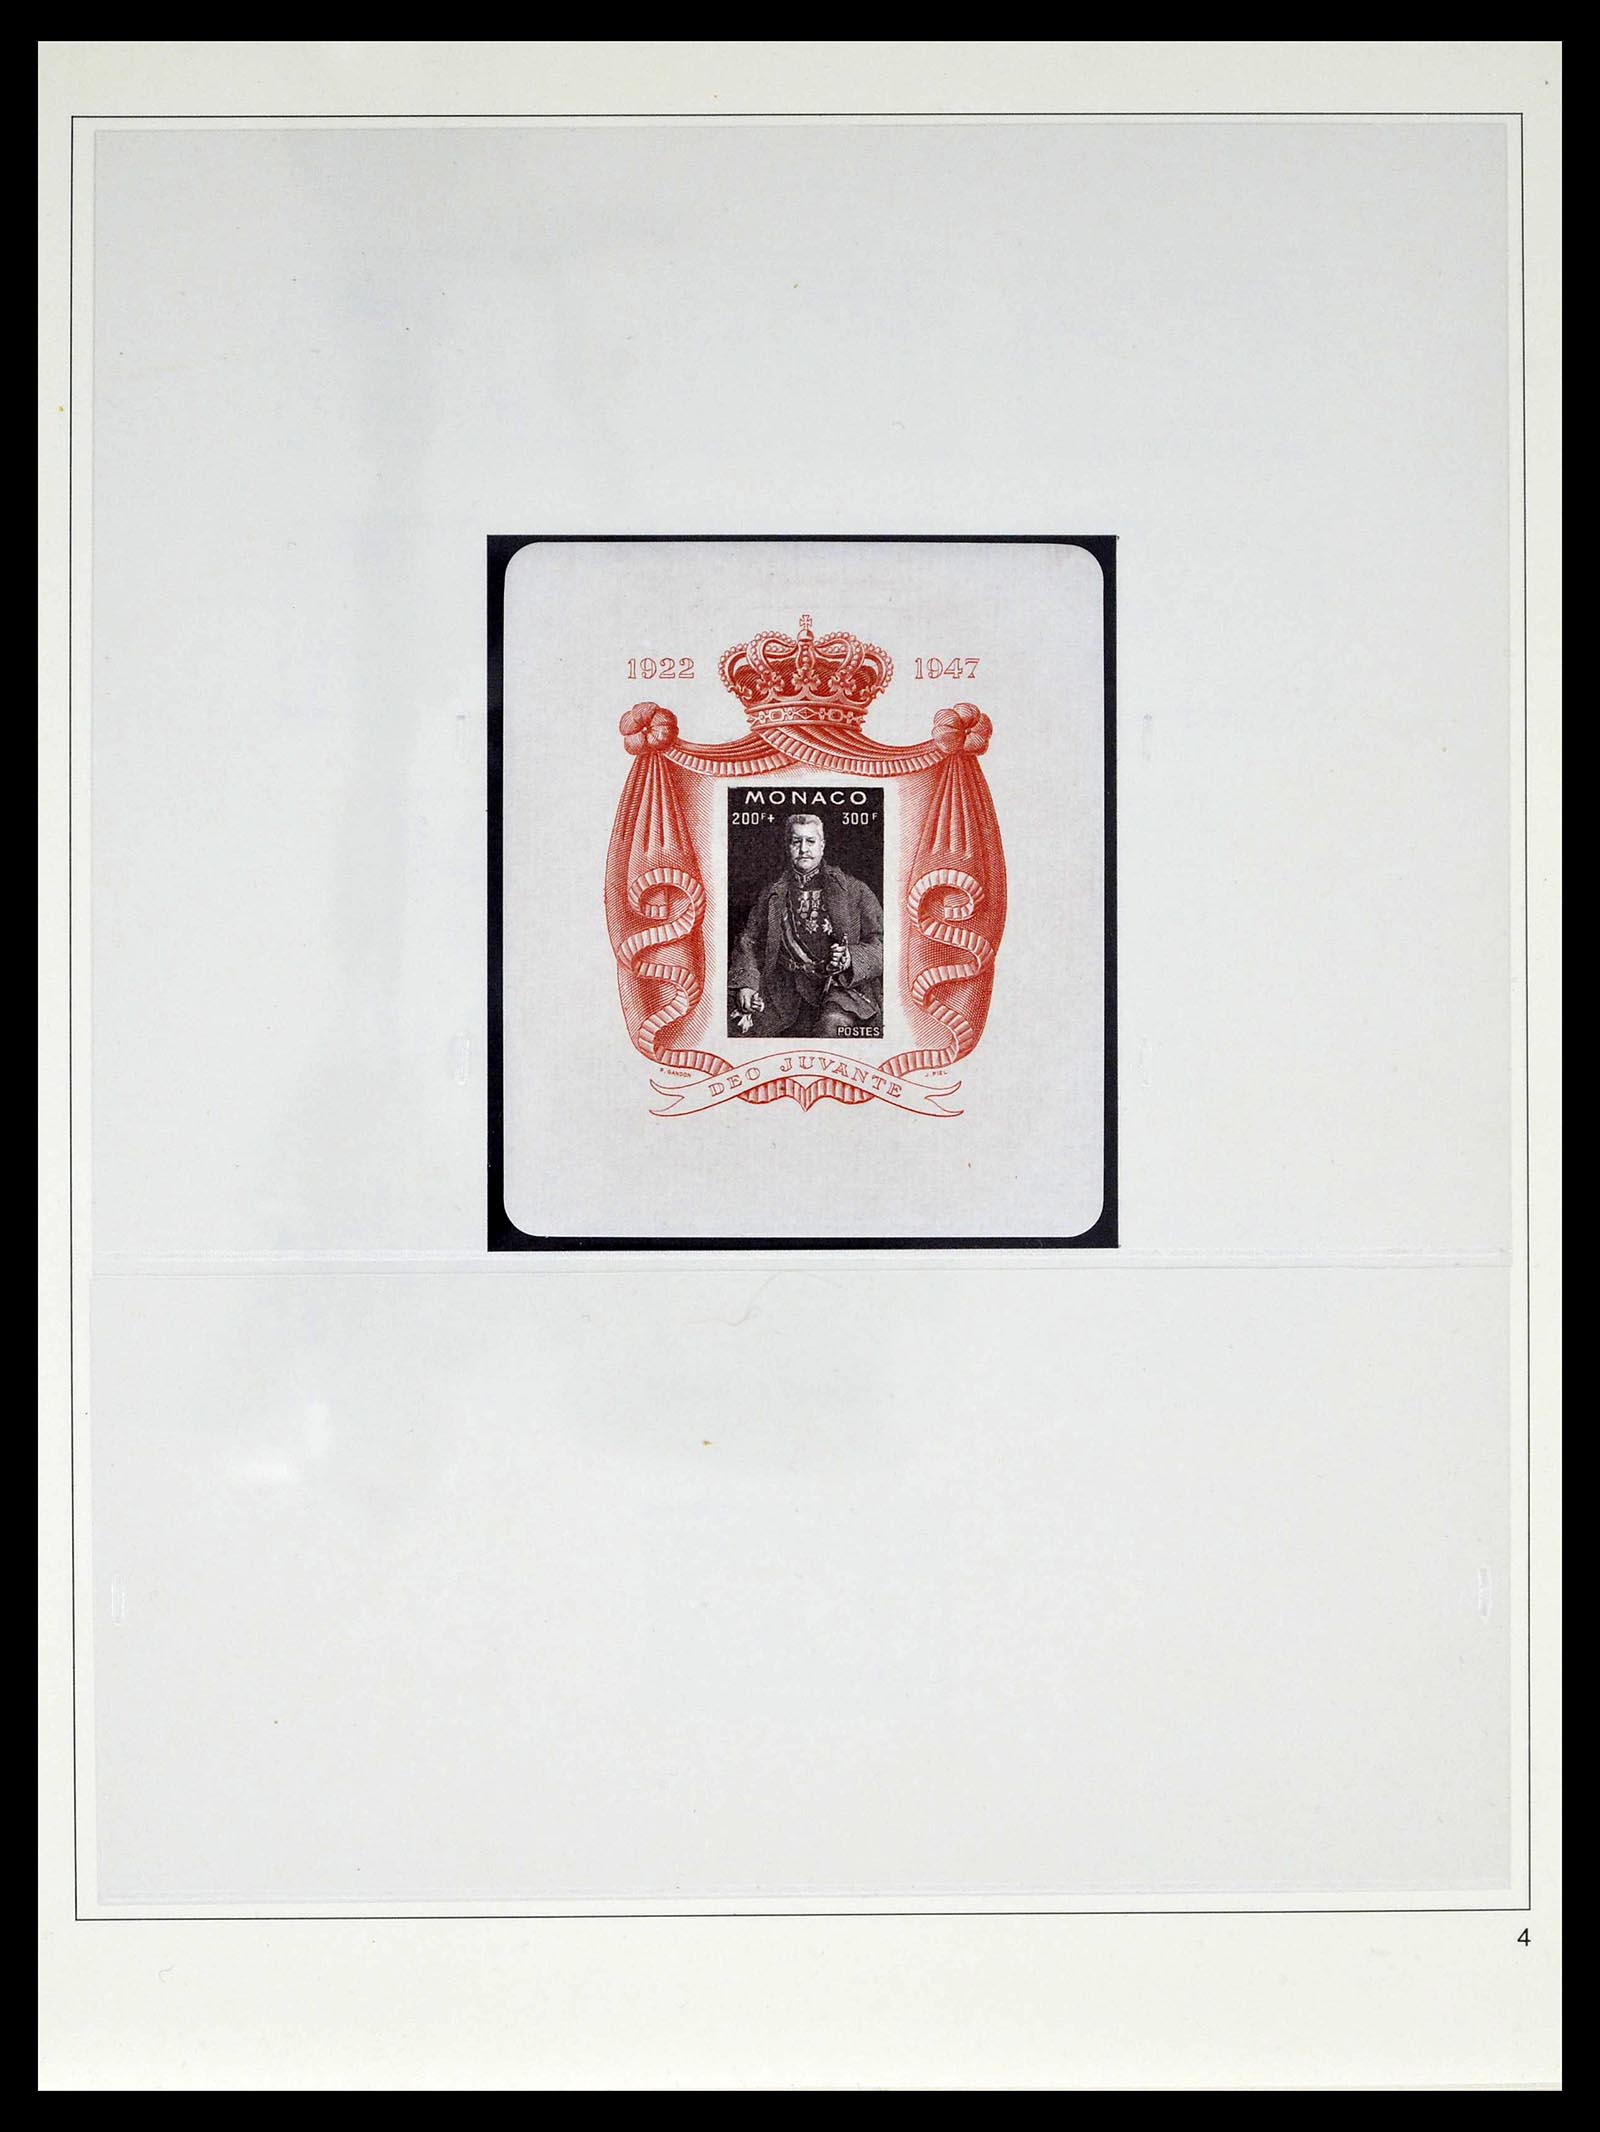 39211 0020 - Stamp collection 39211 Monaco 1885-1983.